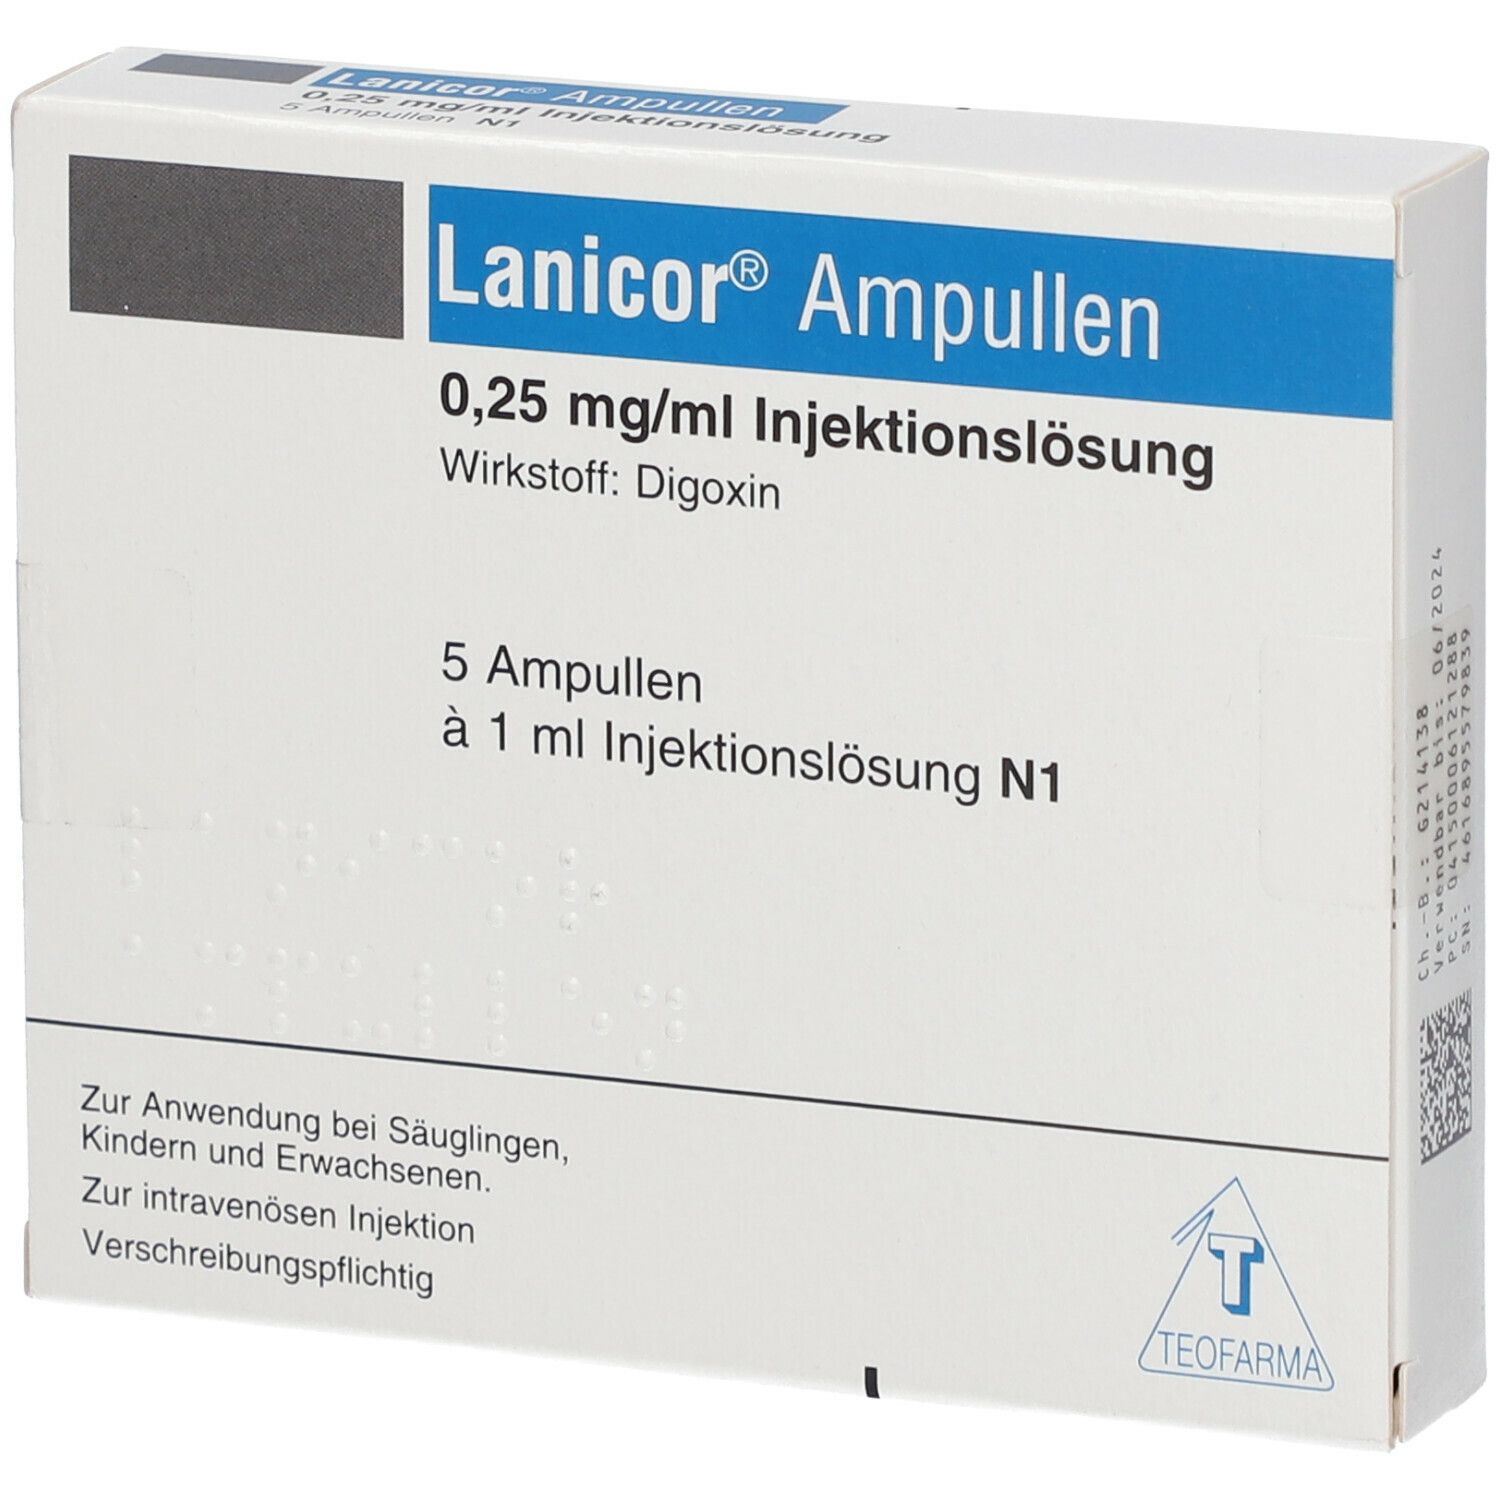 Lanicor® Ampullen 0,25 mg Digoxin/ml